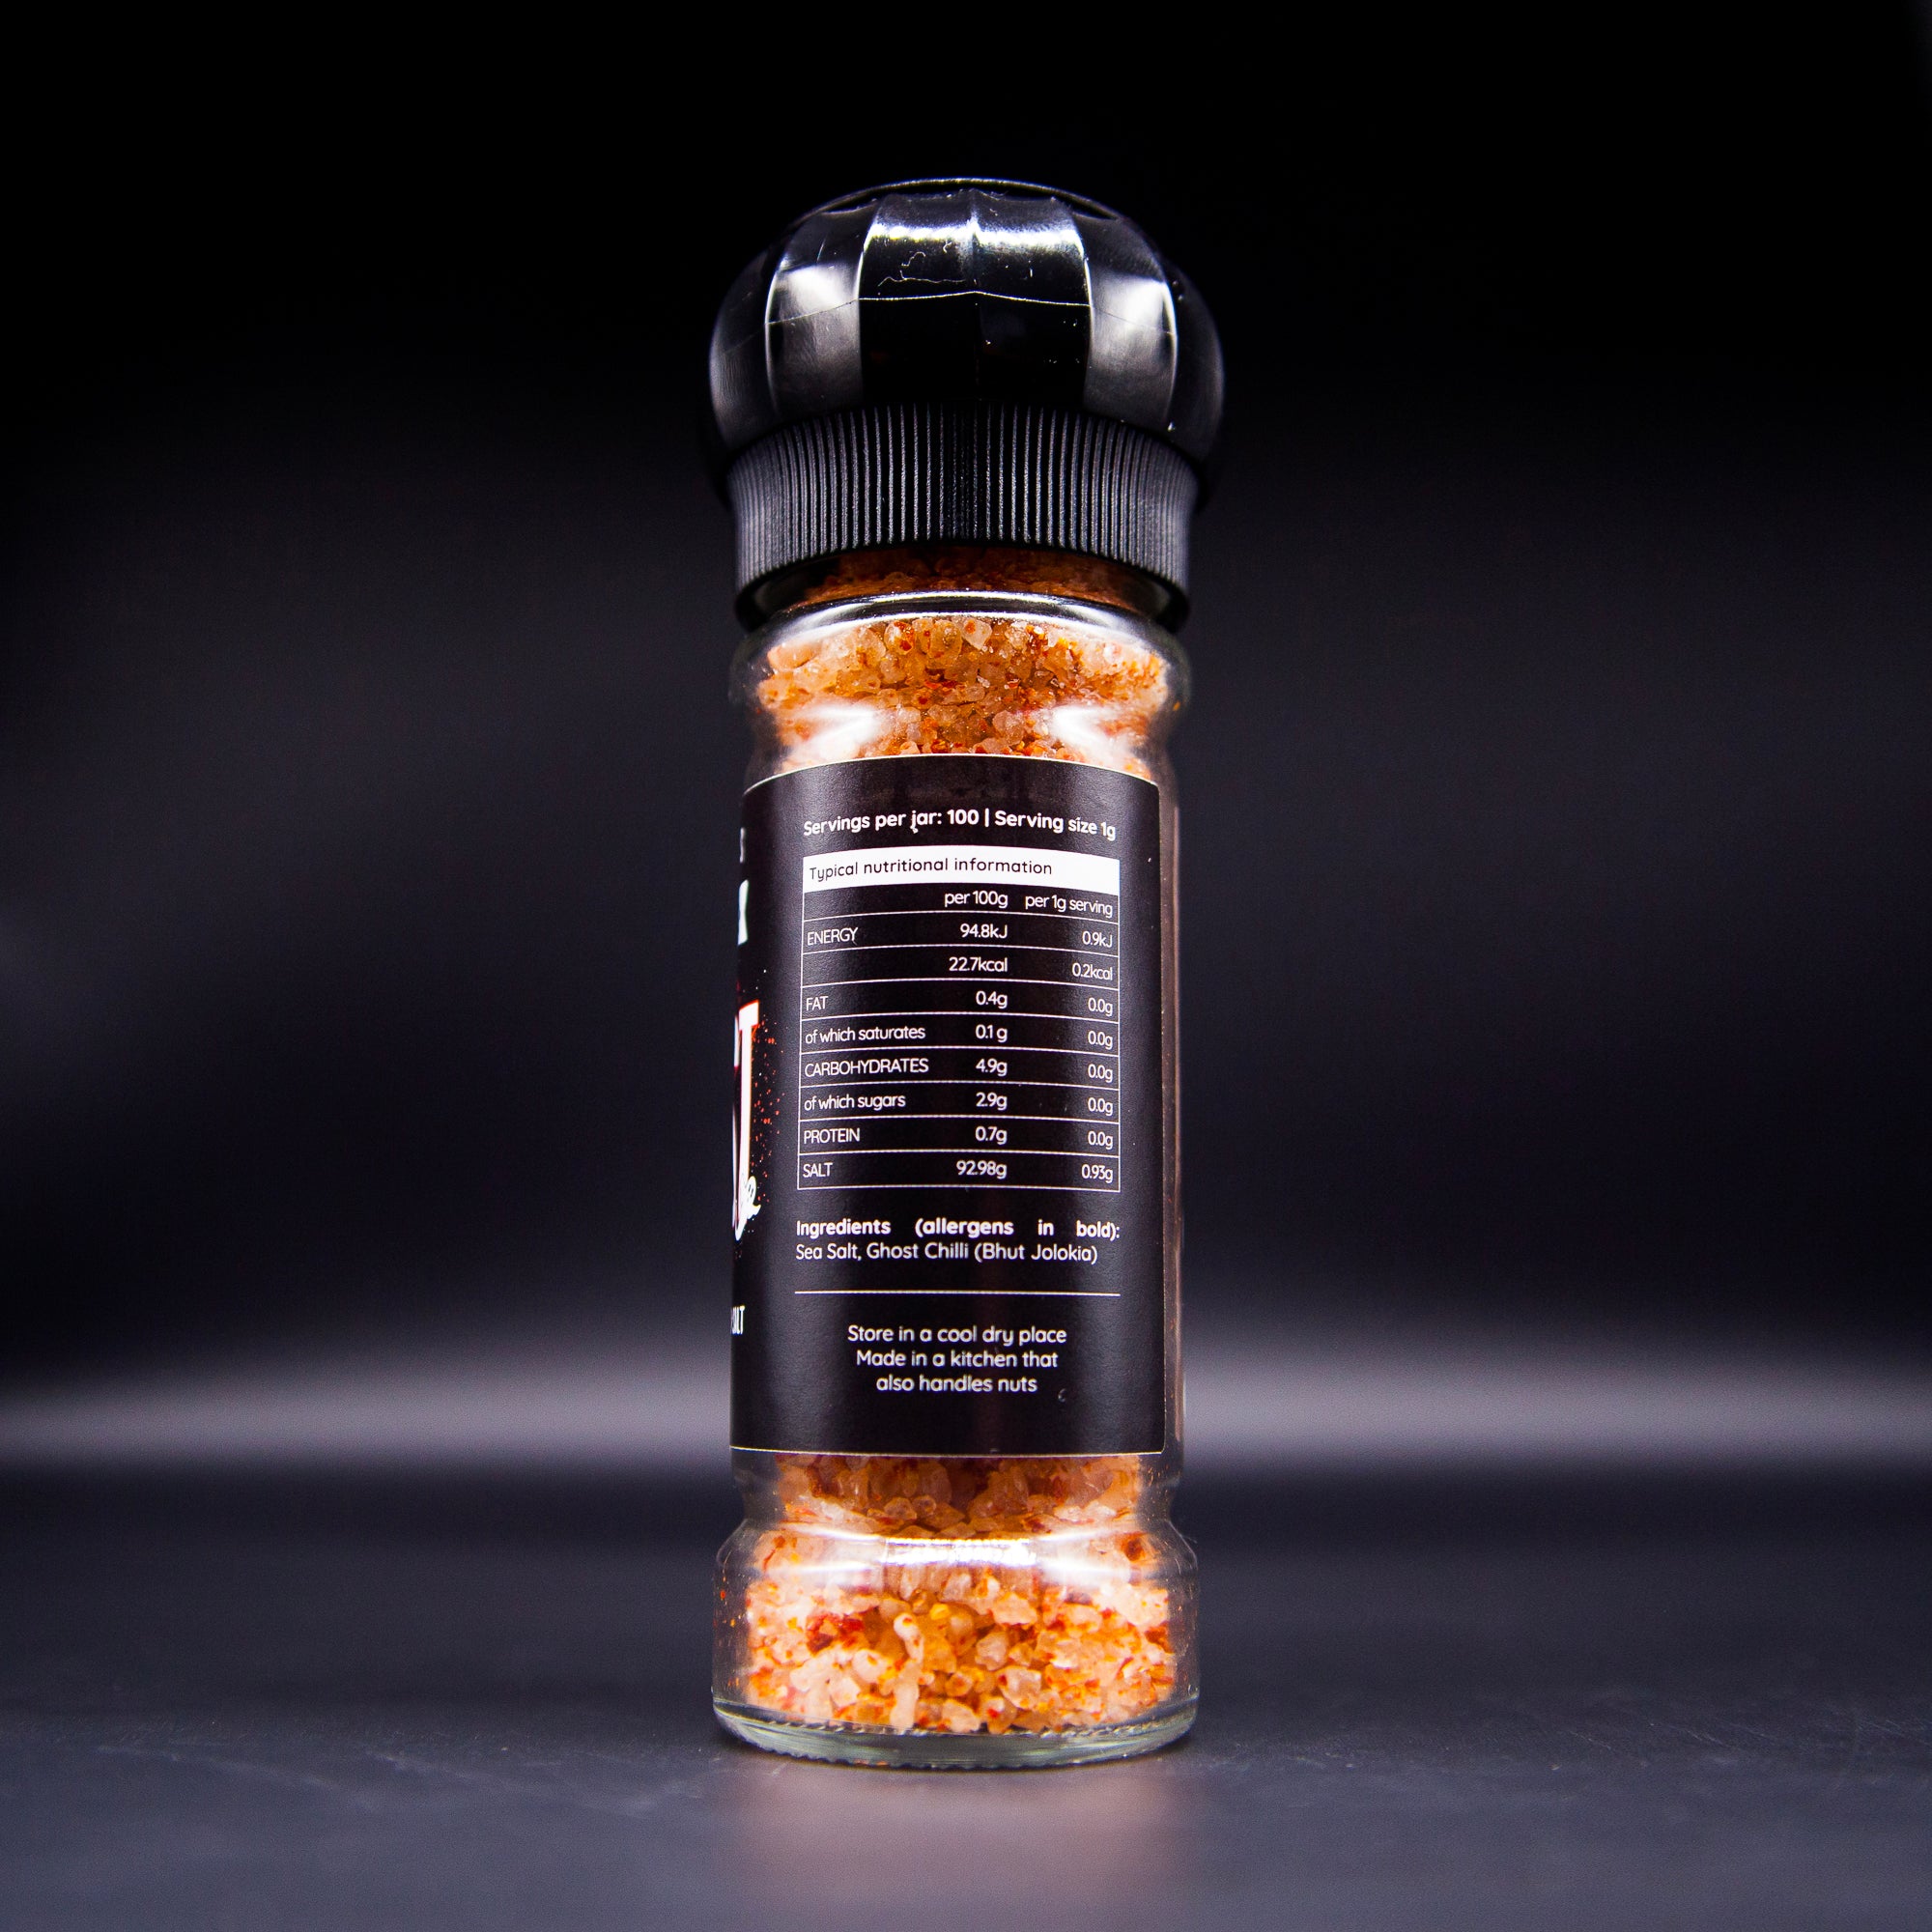 Condimaniac's 'Cheeky Salts' Ghost Pepper Infused Salt